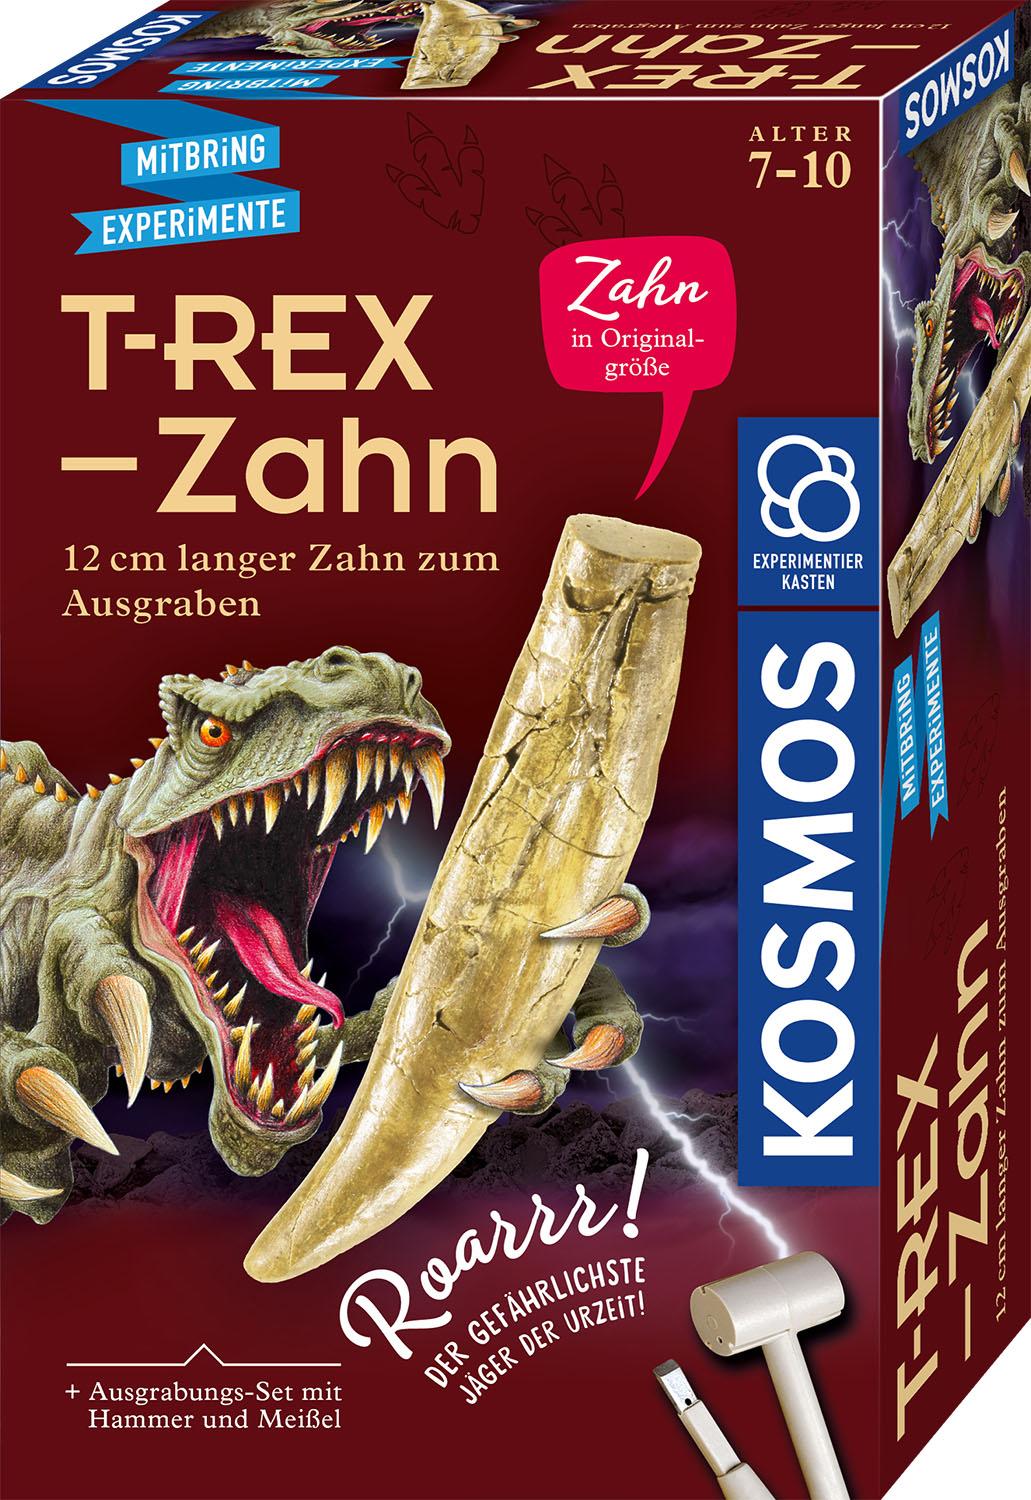 Mitbring Experimente - T-Rex-Zahn